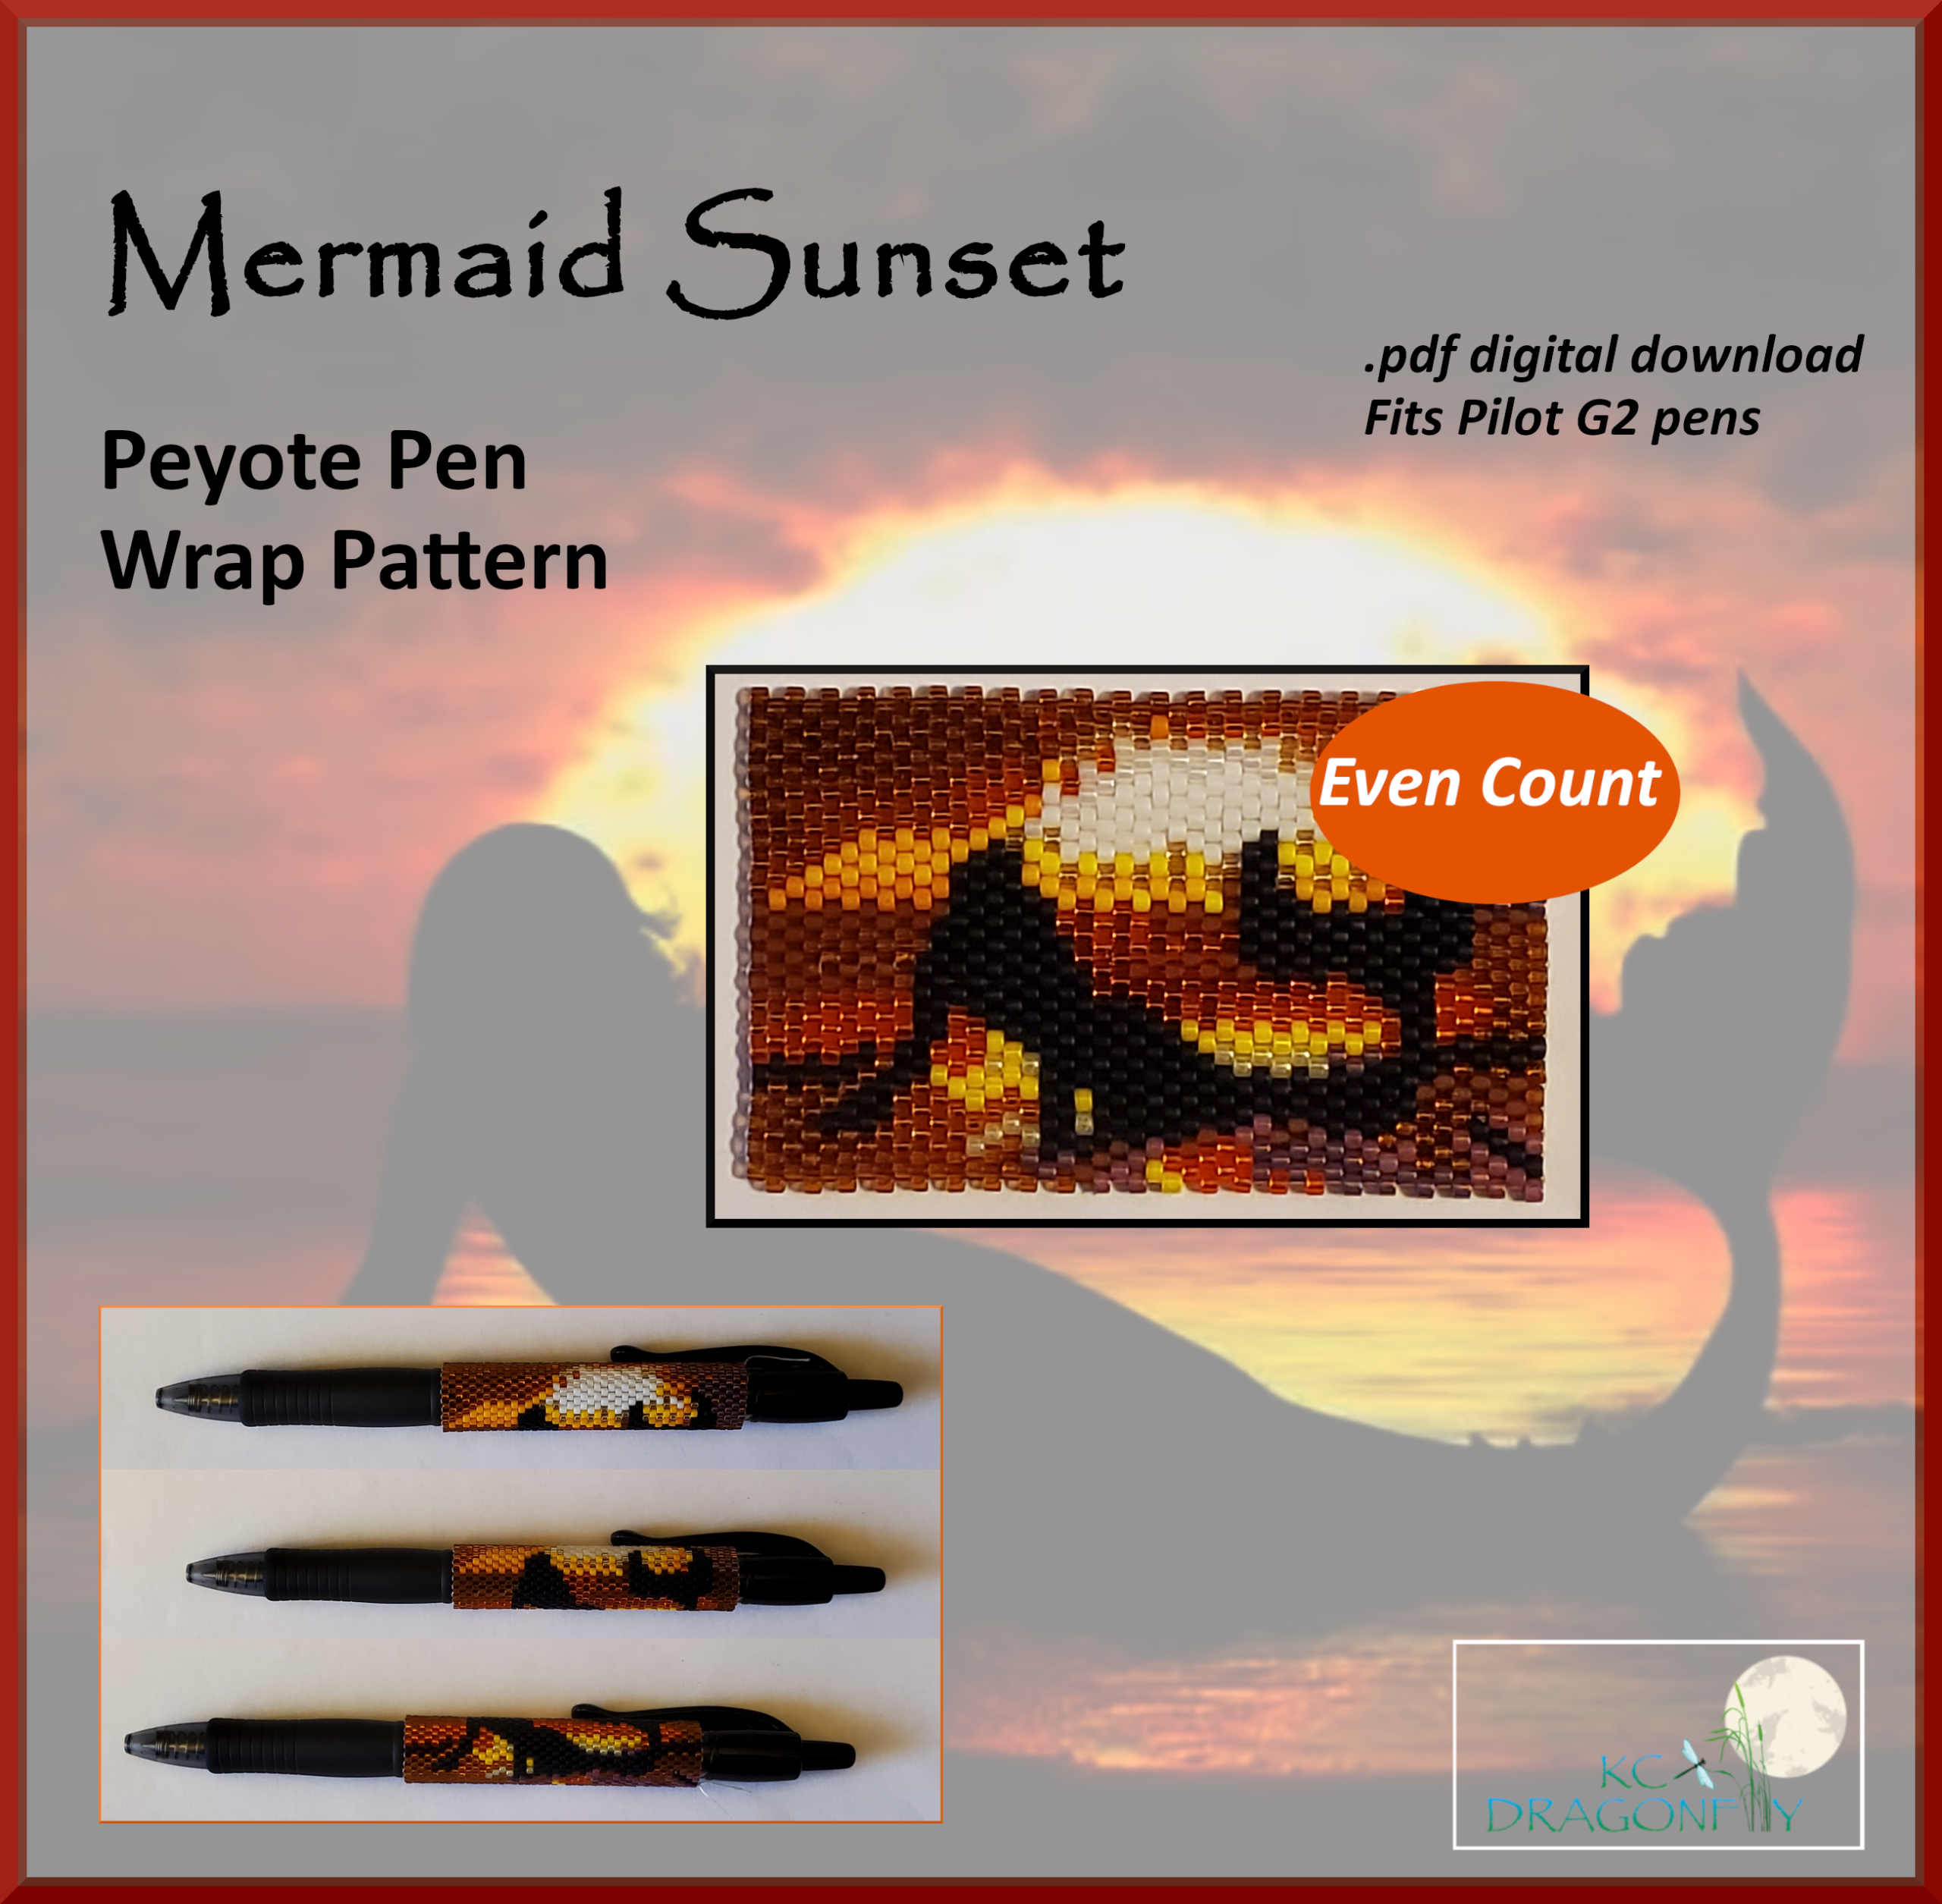 New Product – Mermaid Sunset